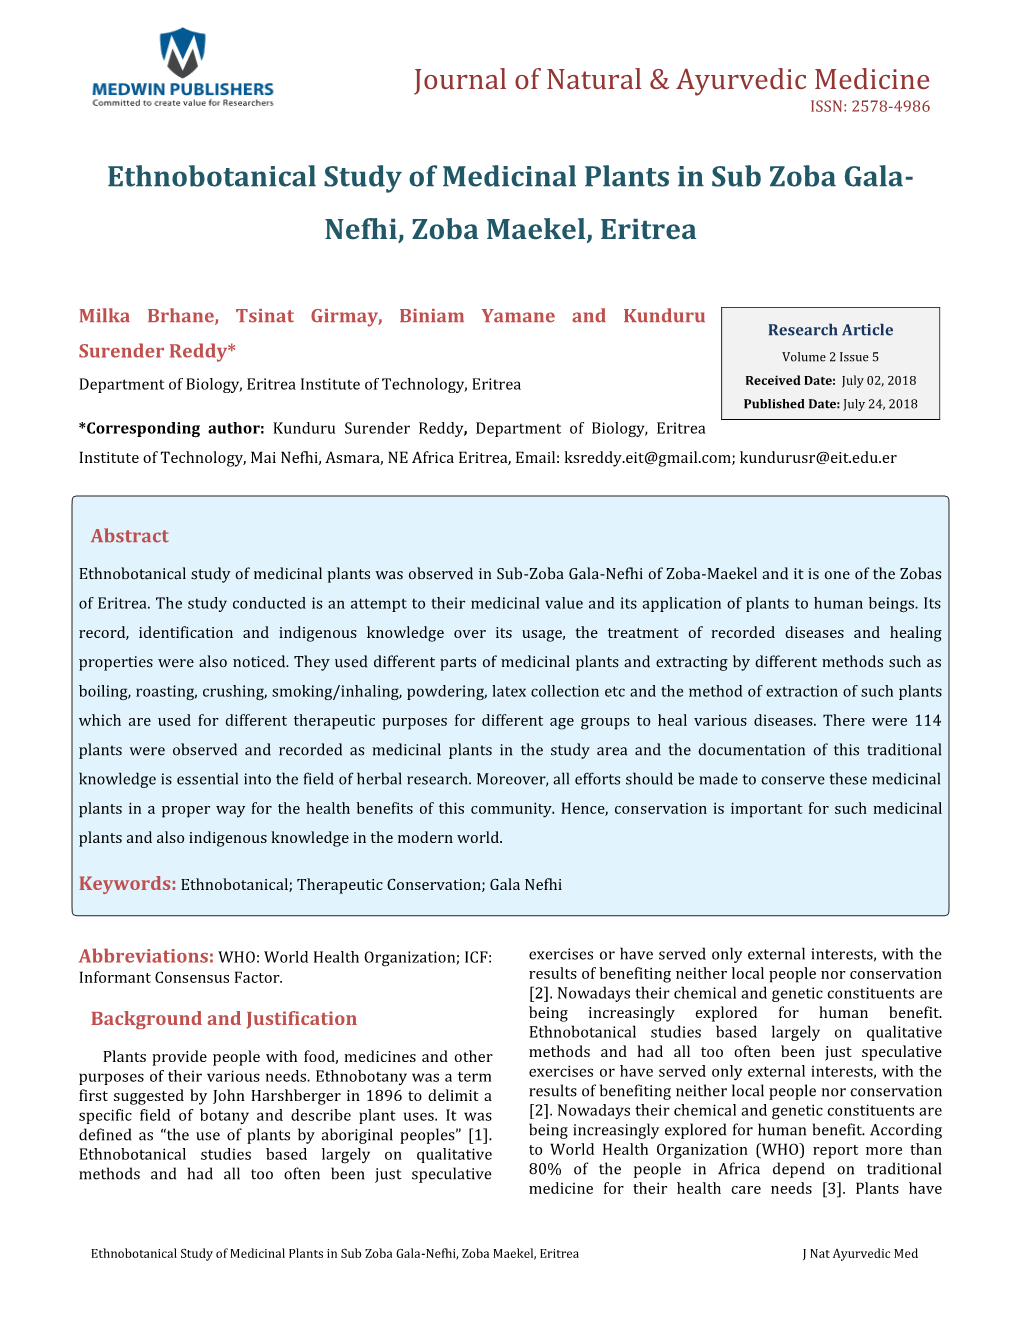 Ethnobotanical Study of Medicinal Plants in Sub Zoba Gala-Nefhi, Zoba Maekel, Eritrea J Nat Ayurvedic Med 2 Journal of Natural & Ayurvedic Medicine